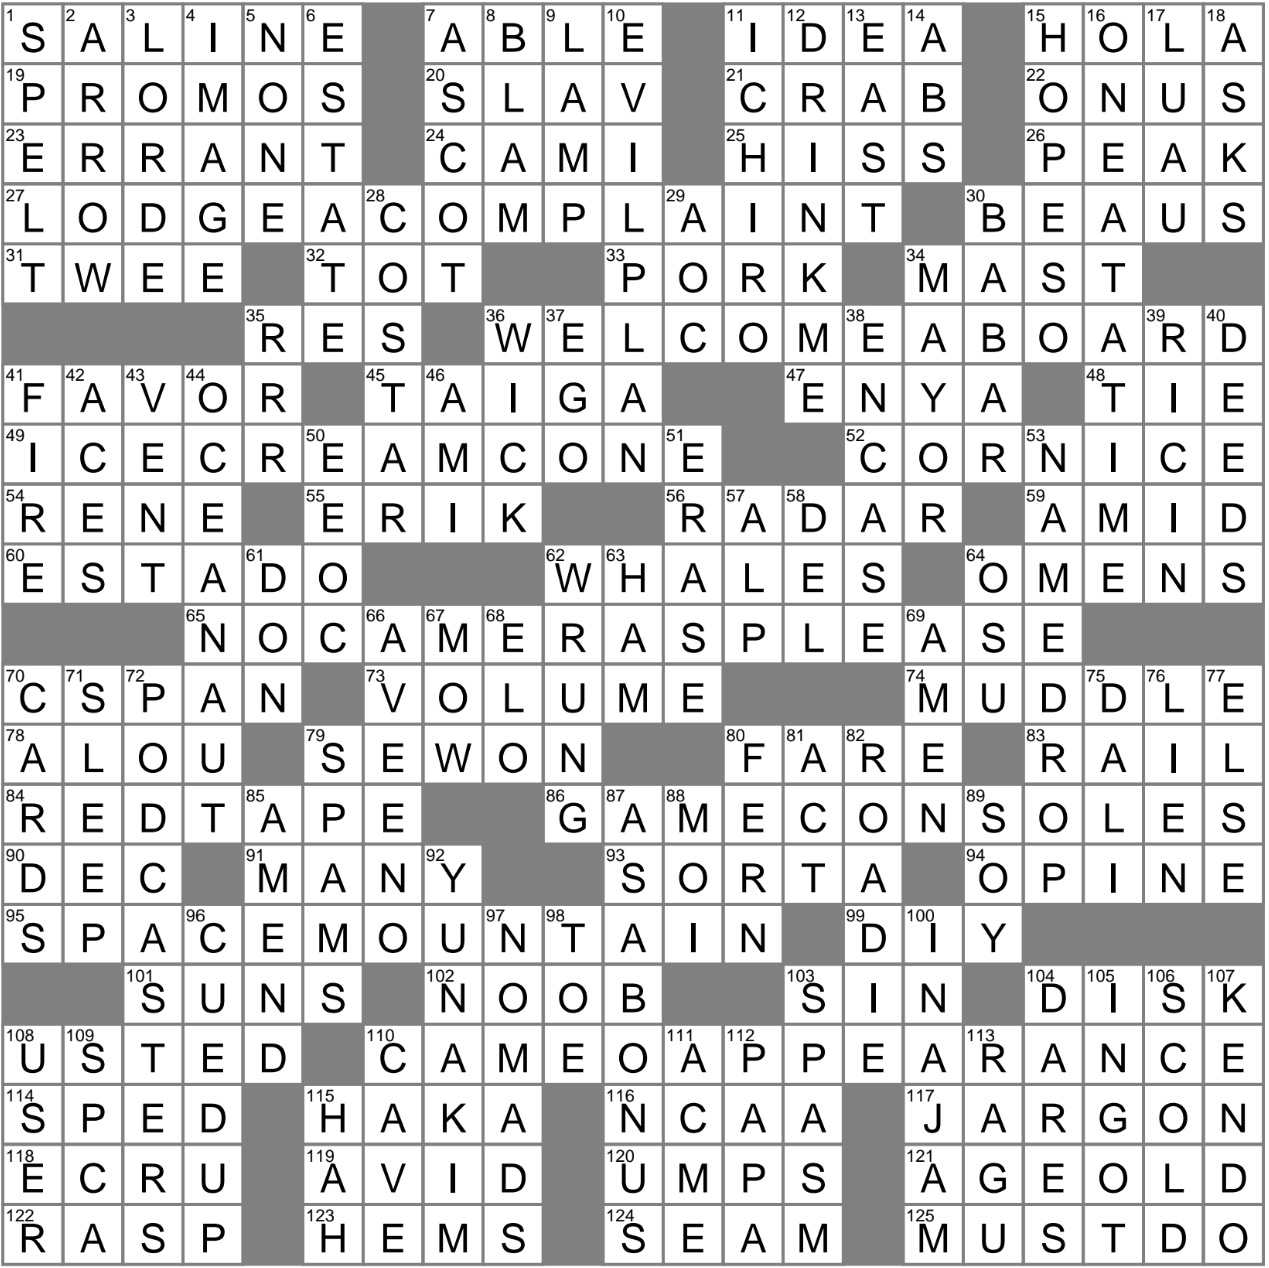 la-times-crossword-23-jul-23-sunday-laxcrossword